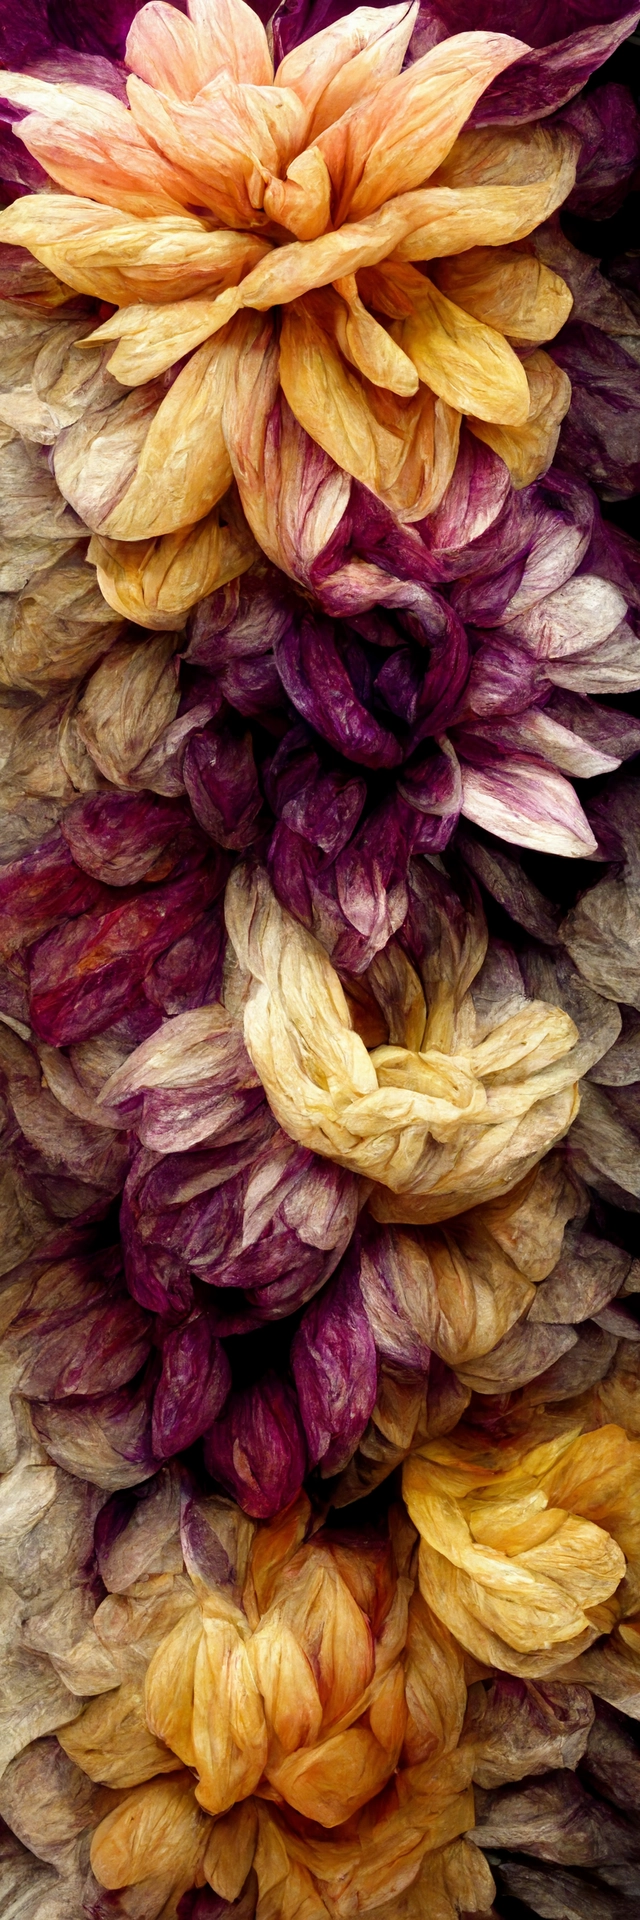 chains of Dahlia flowers, various gradient colors, paper crumpled texture,